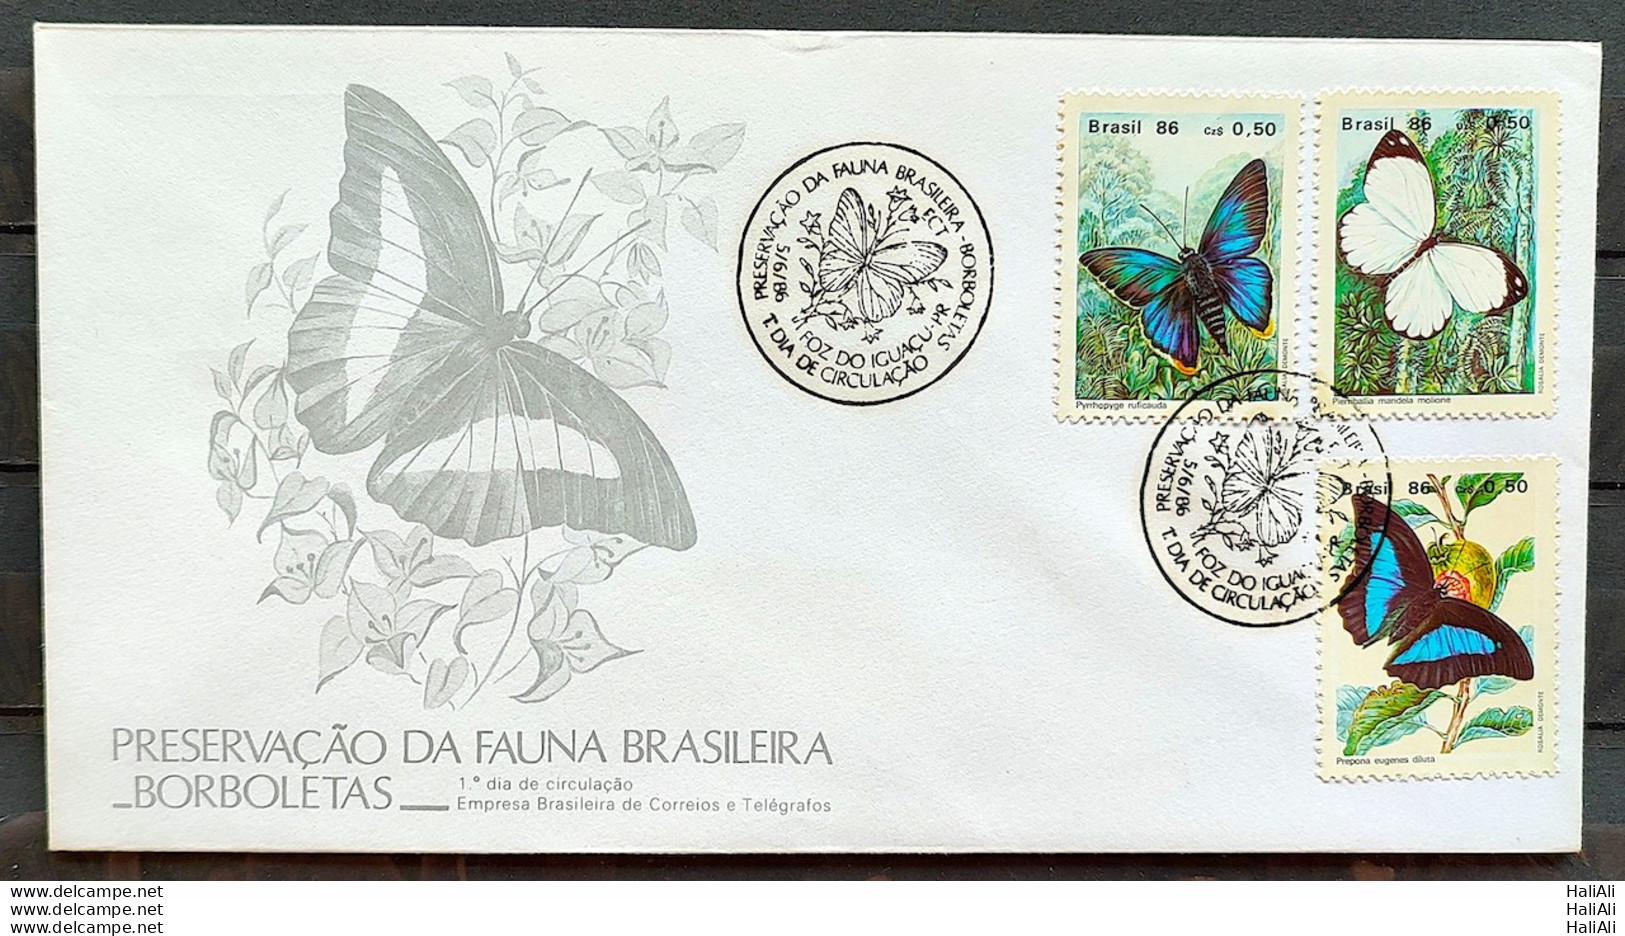 Brazil Envelope FDC 395 1986 Insect Butterflies Fauna CBC PR - FDC